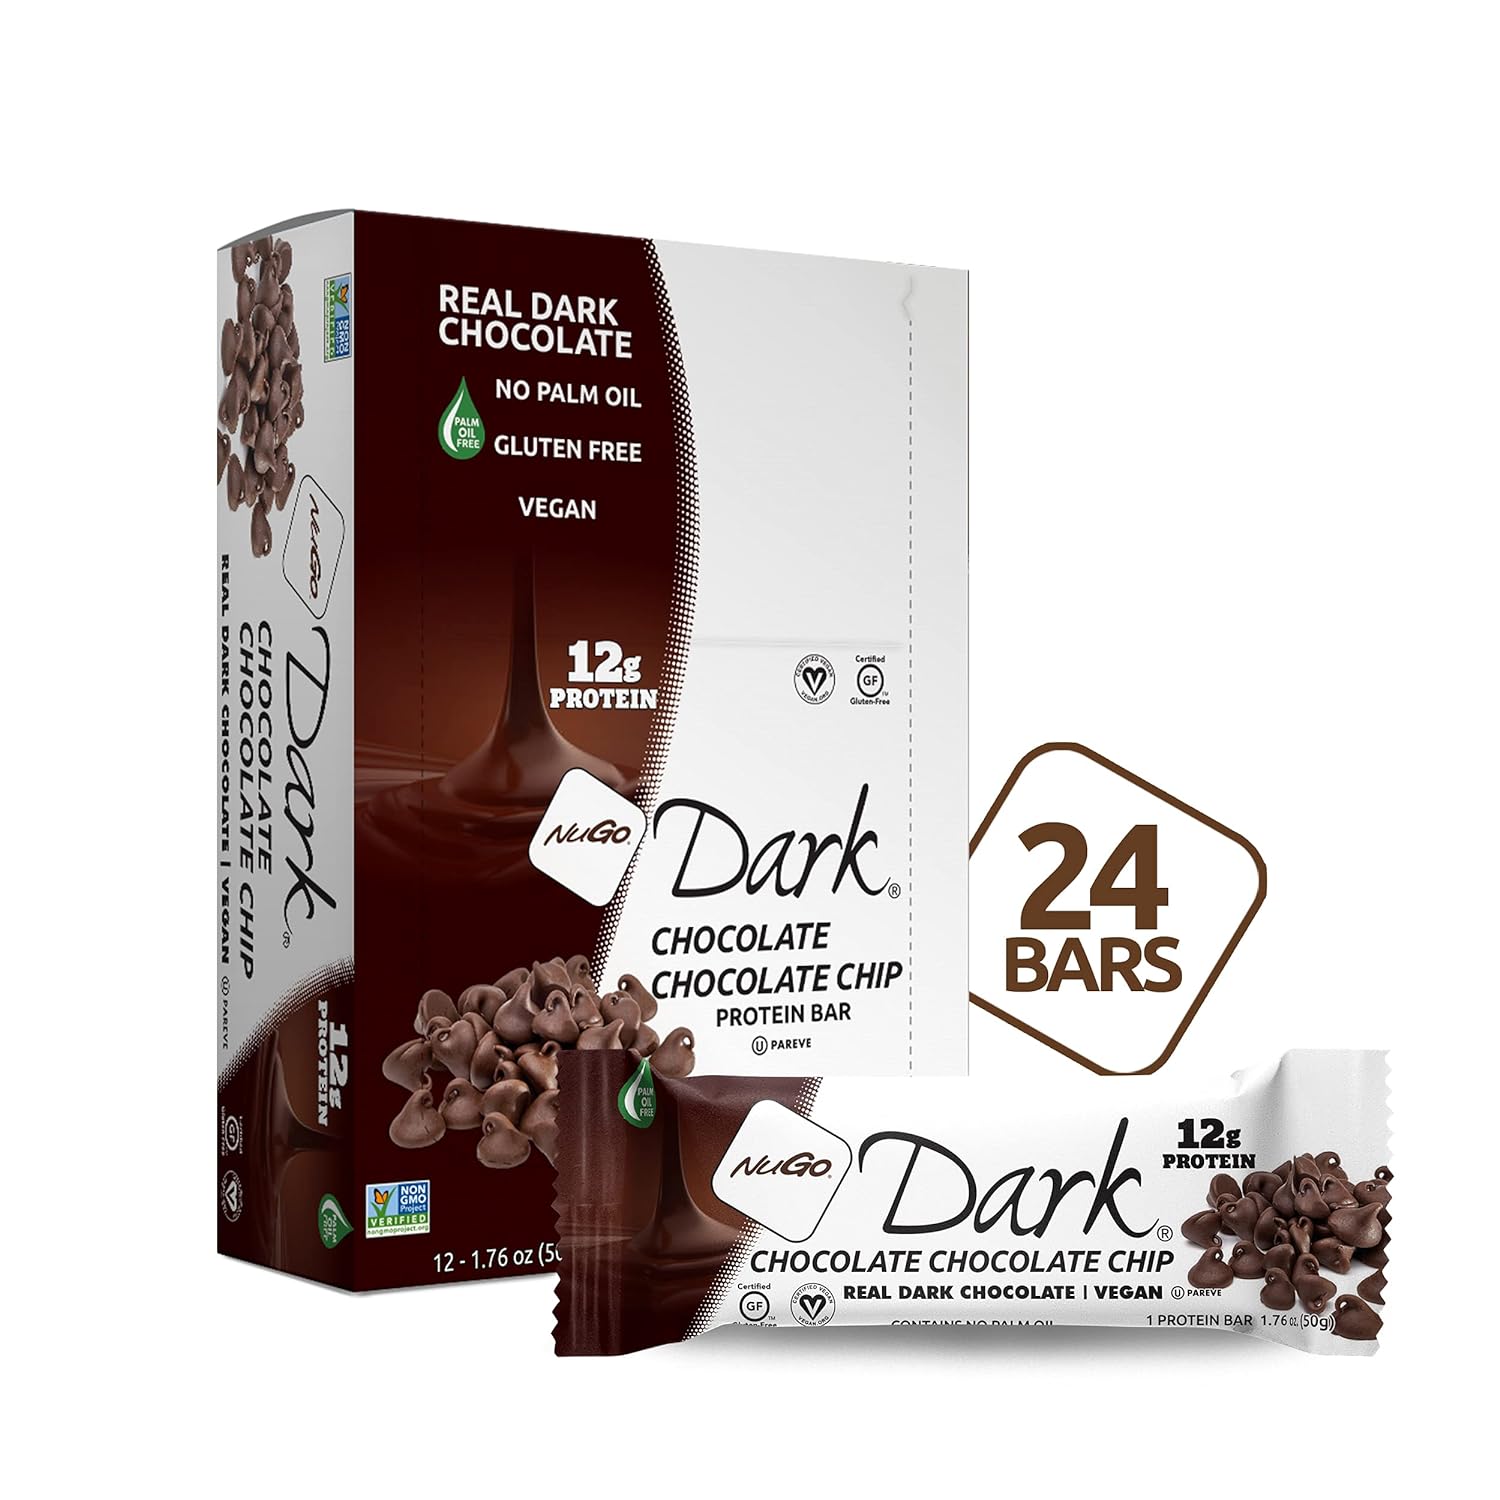 NuGo Dark Chocolate Chocolate Chip, 12g Vegan Protein, 200 Calorie, Gluten Free, 24 Count